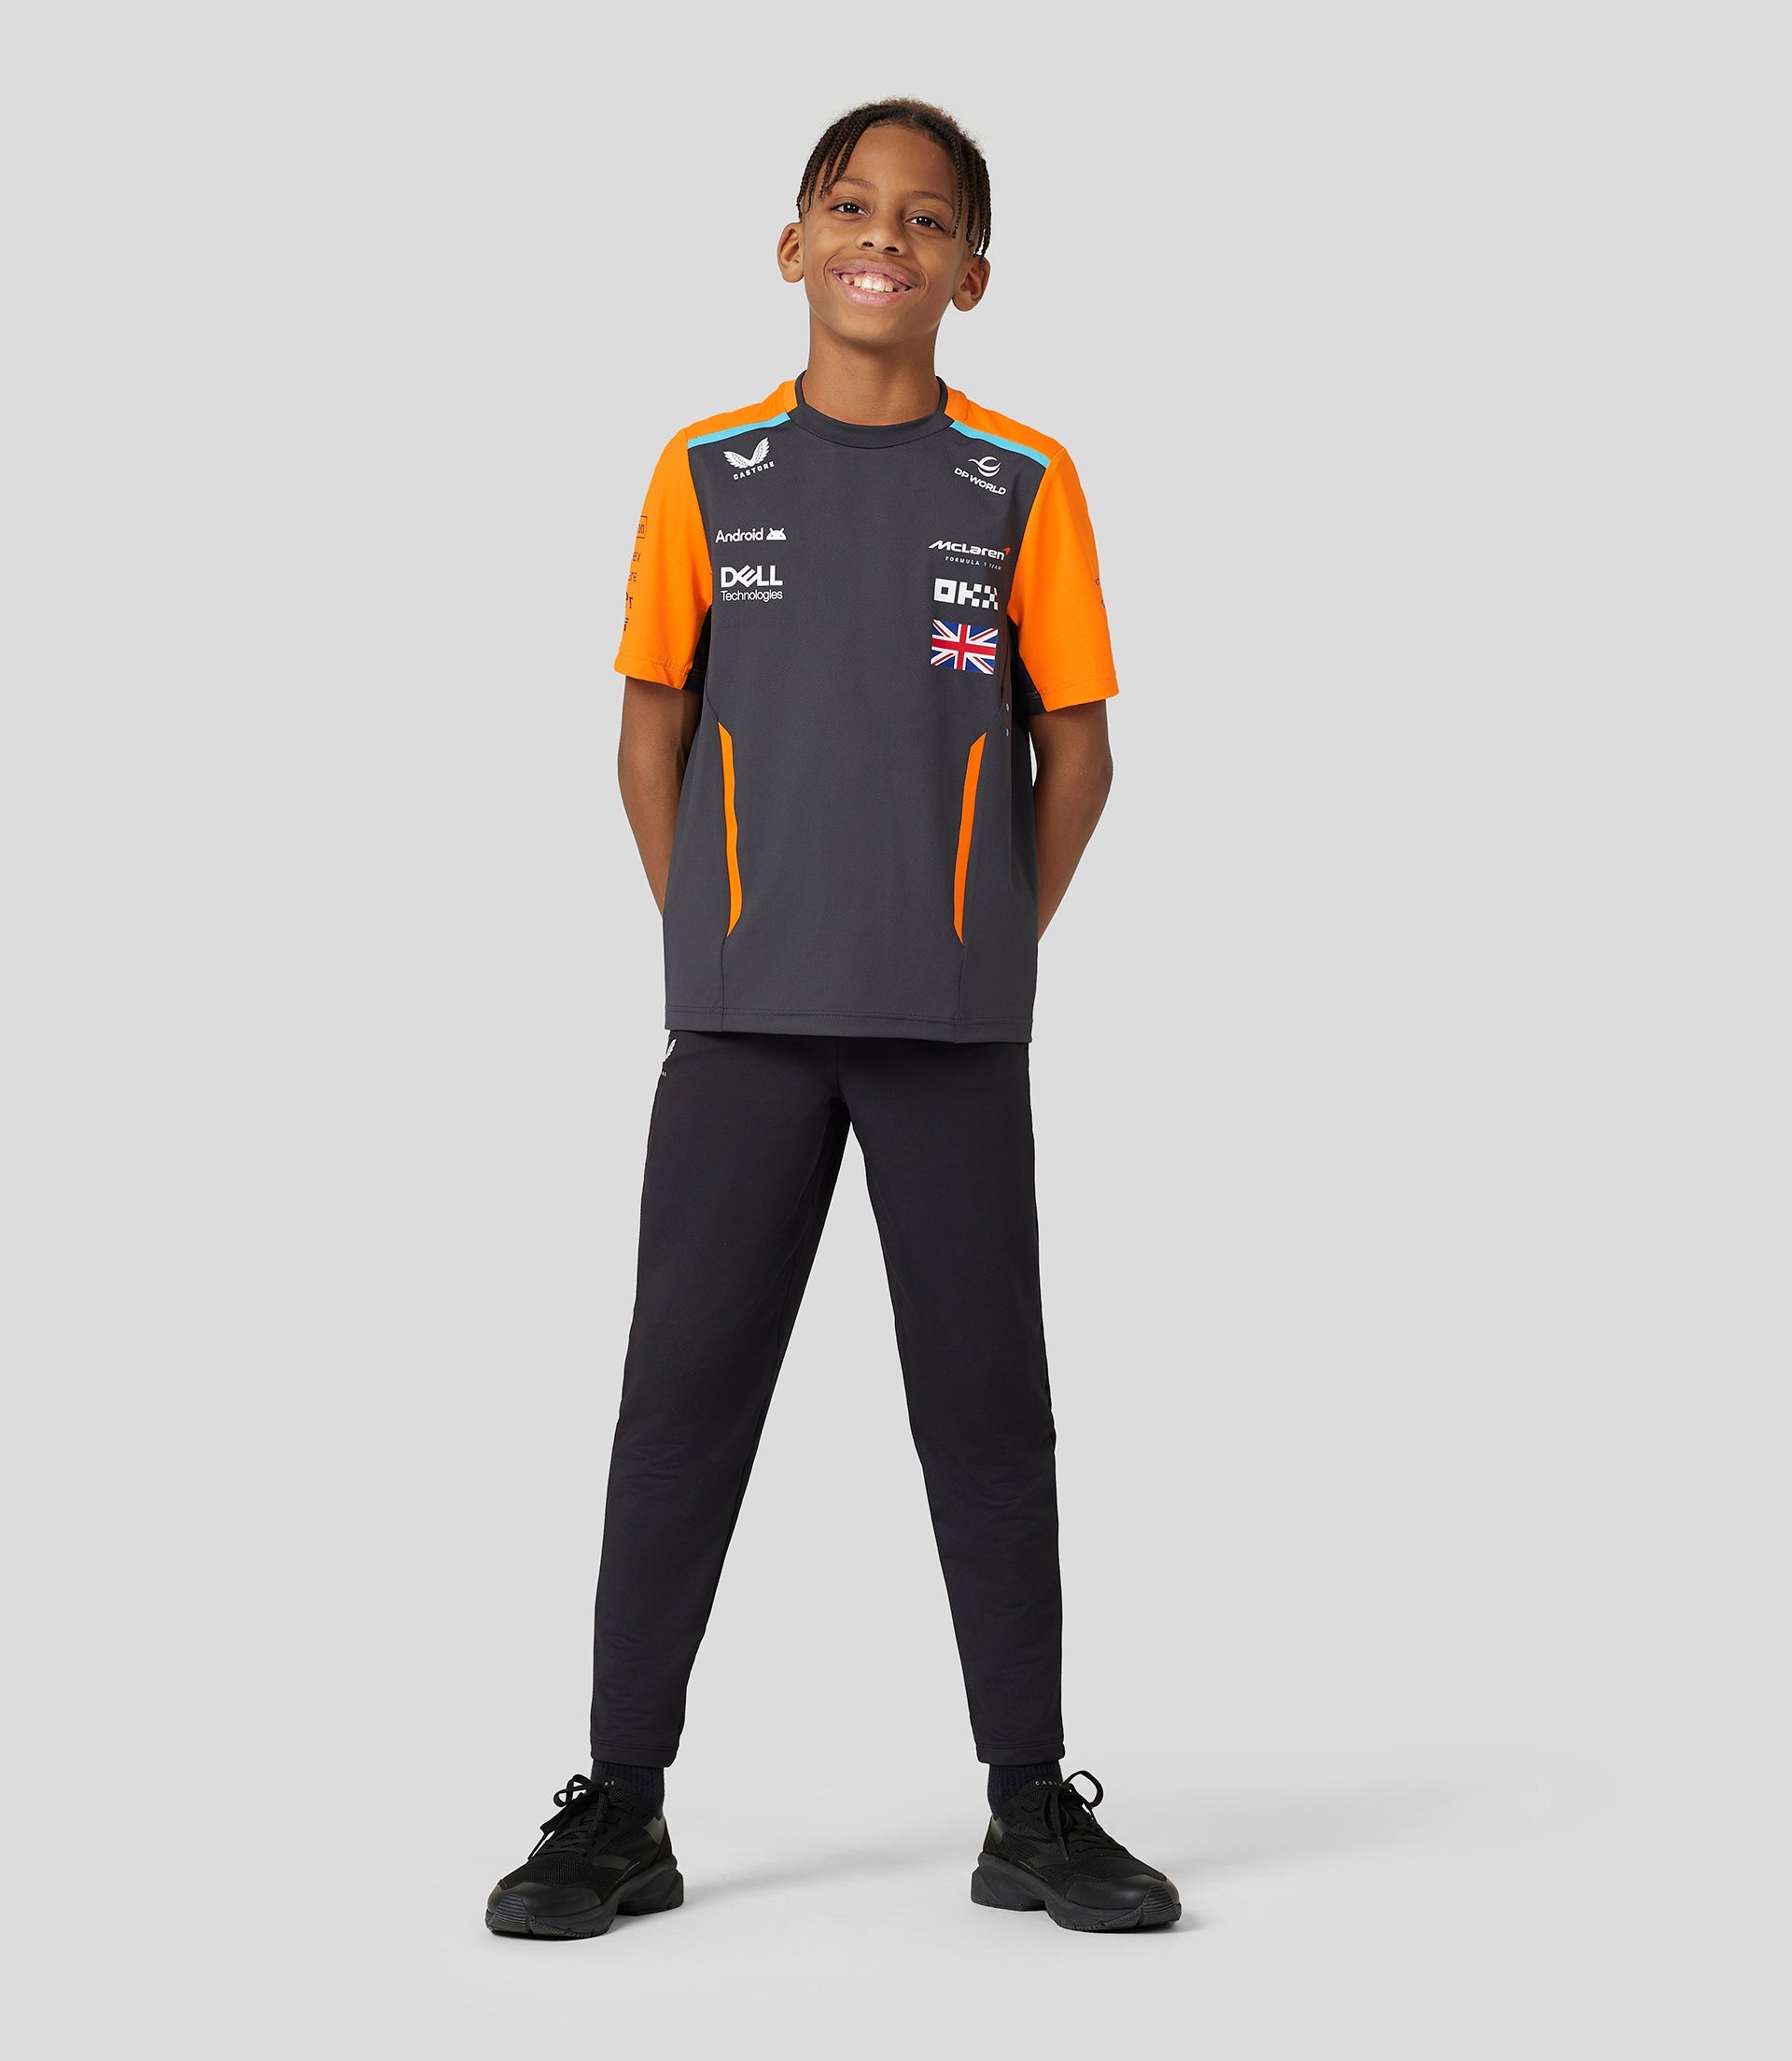 McLaren Junior Official Teamwear Set Up T-Shirt Lando Norris Formula 1 - Phantom/Papaya